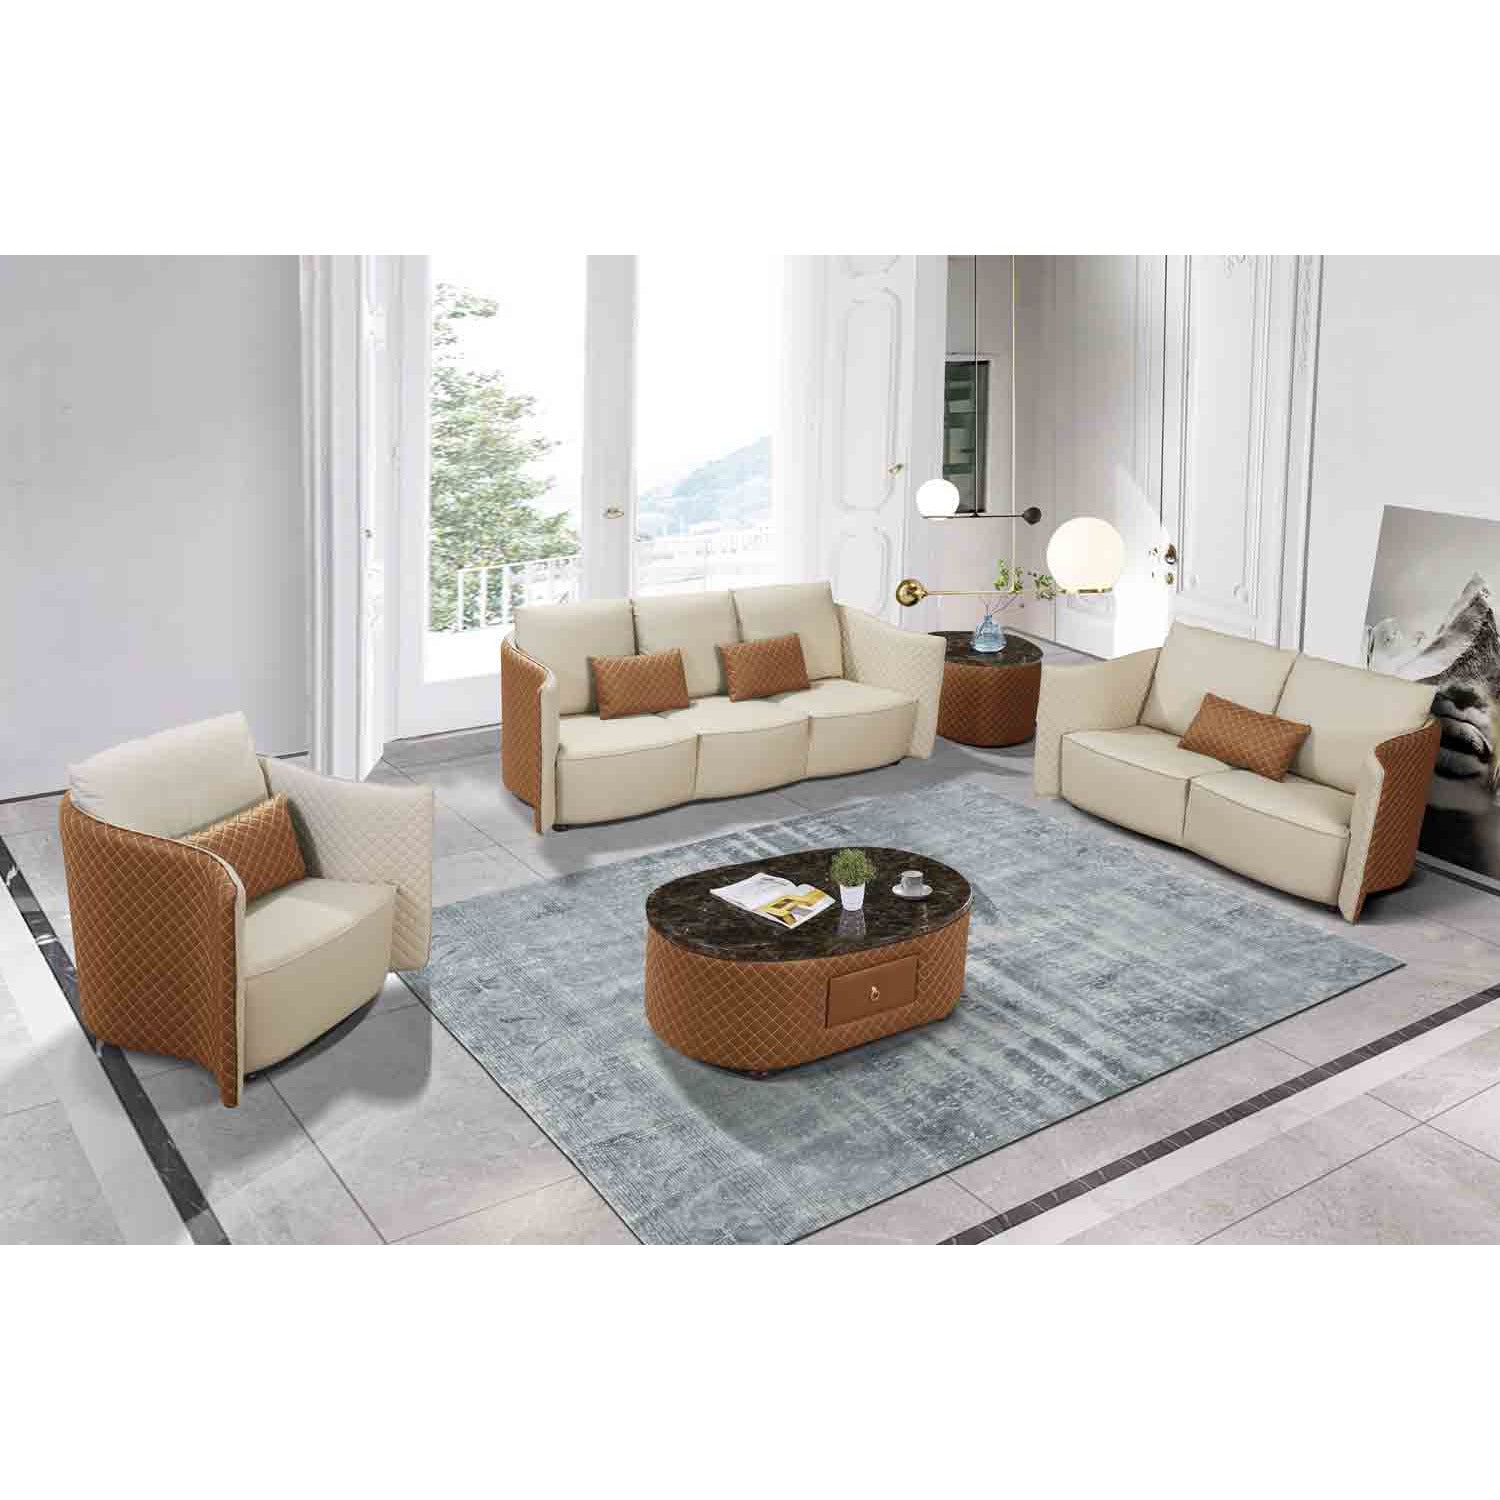 European Furniture - Makassar Loveseat in Sand Beige & Orange - 52552-L - New Star Living